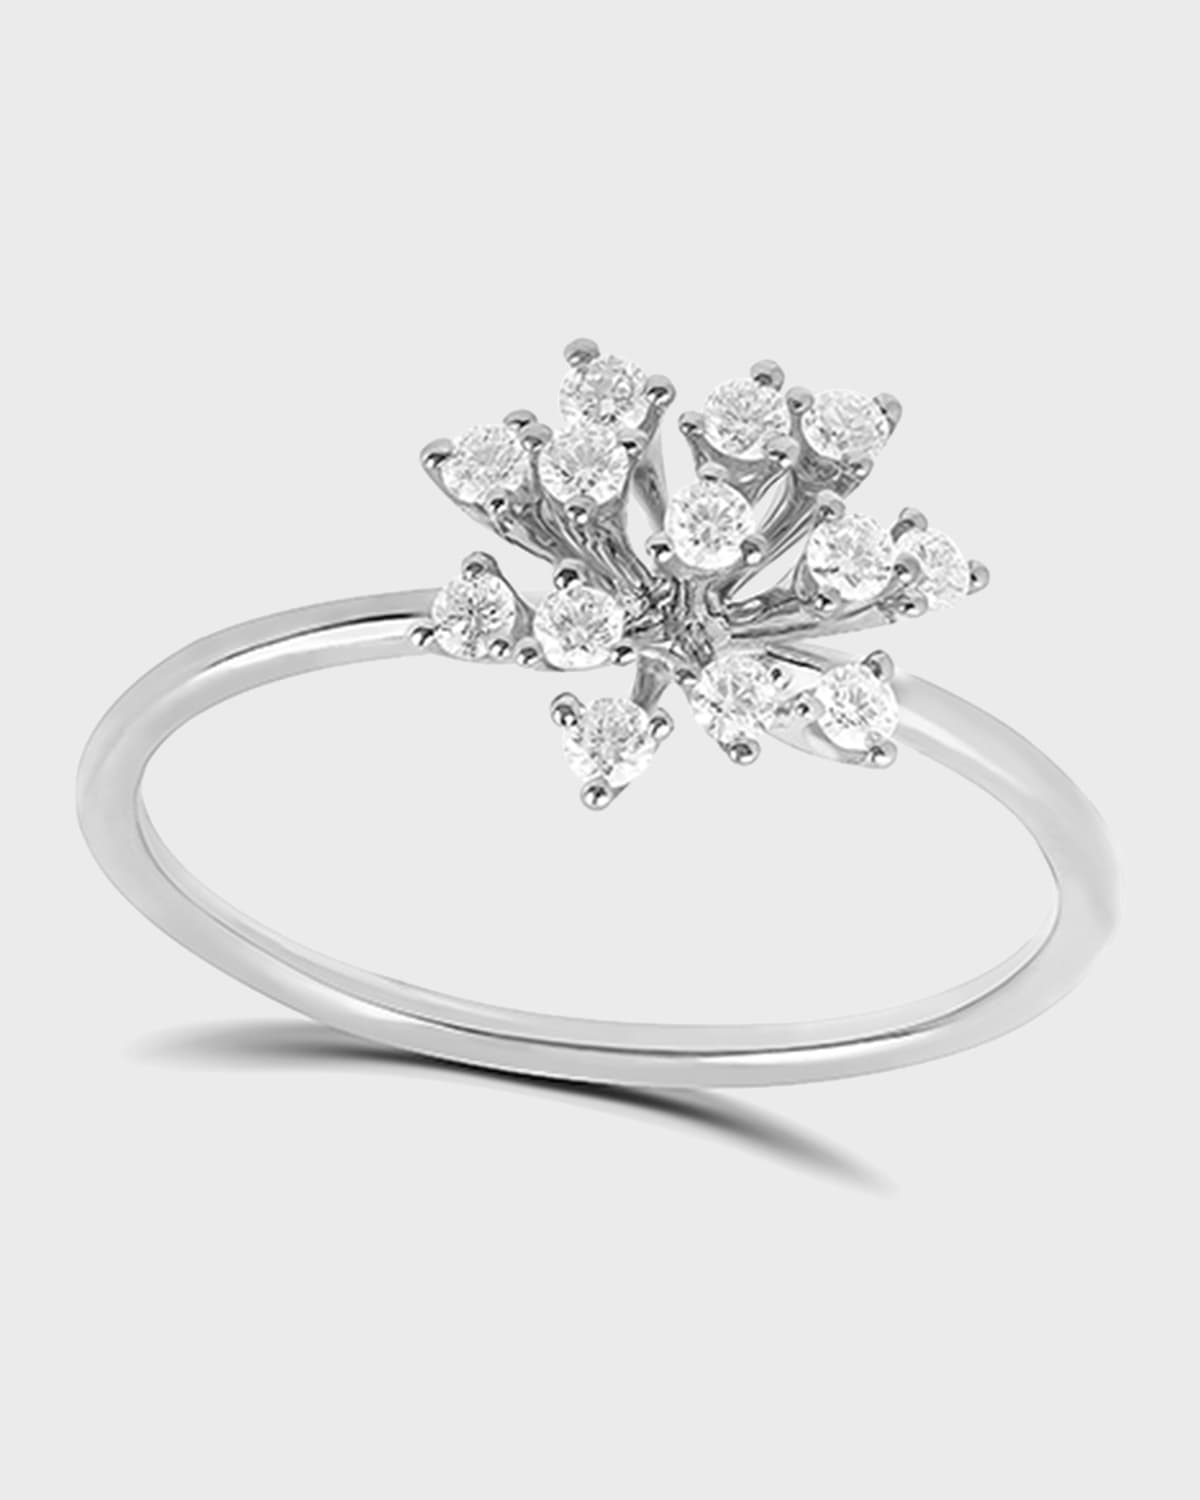 Hueb Luminus 18k White Gold Diamond Small Stemmed Ring, Size 6-7